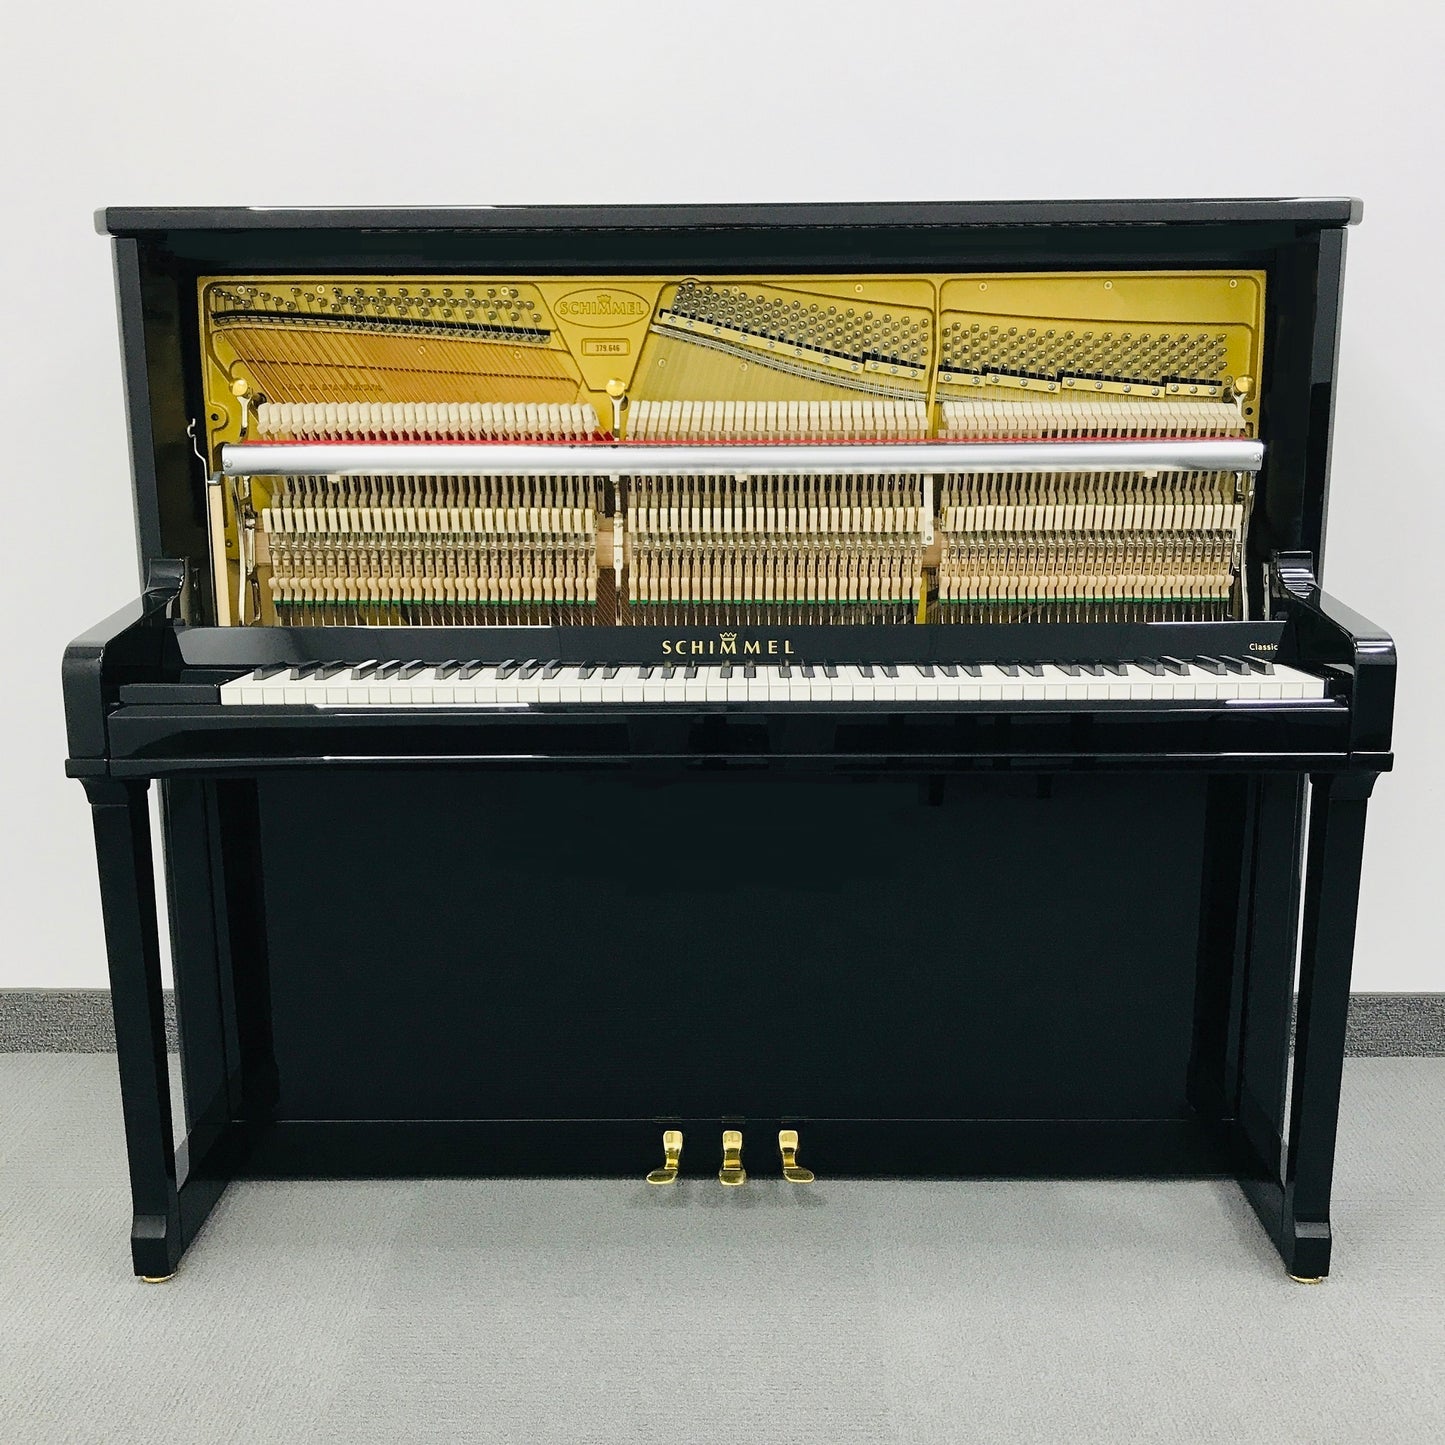 Schimmel Classic C130 Upright Piano